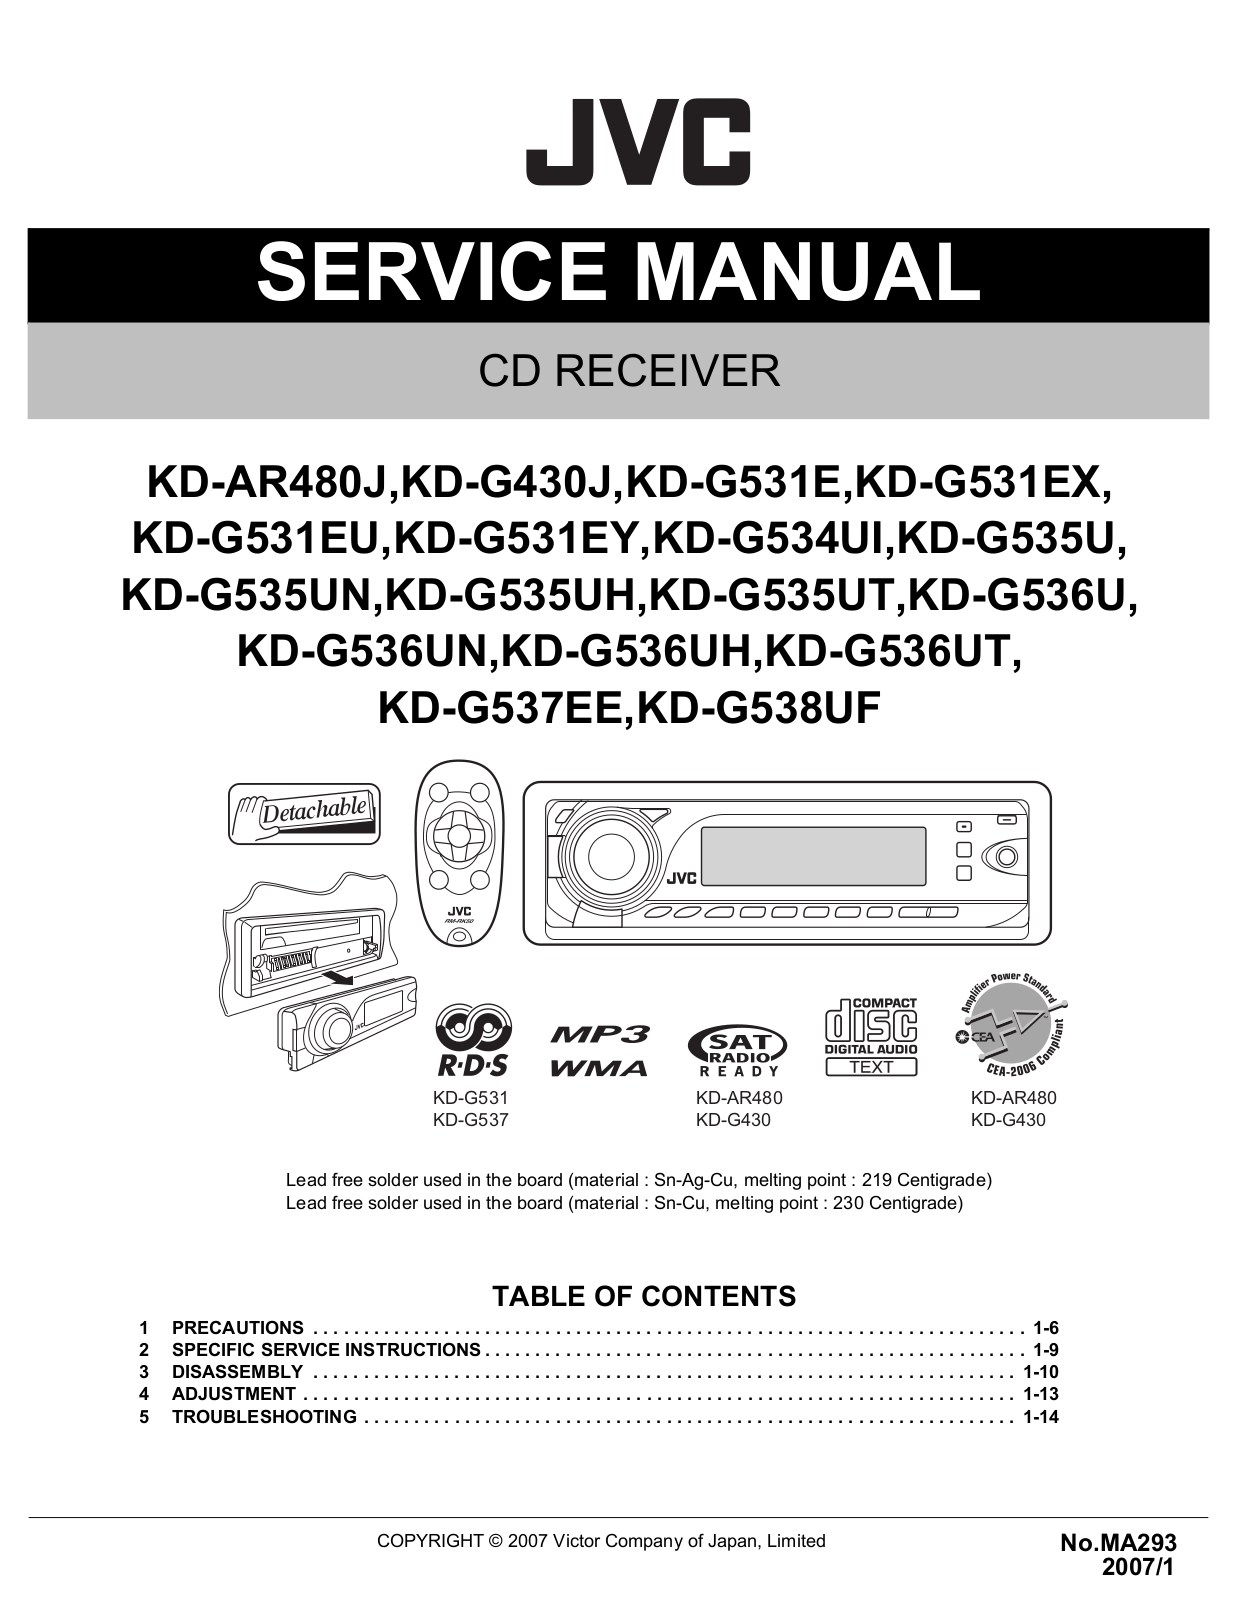 Jvc KD-G538-UF, KD-G537-EE, KD-G536-UH, KD-G536-U, KD-G535-UT Service Manual